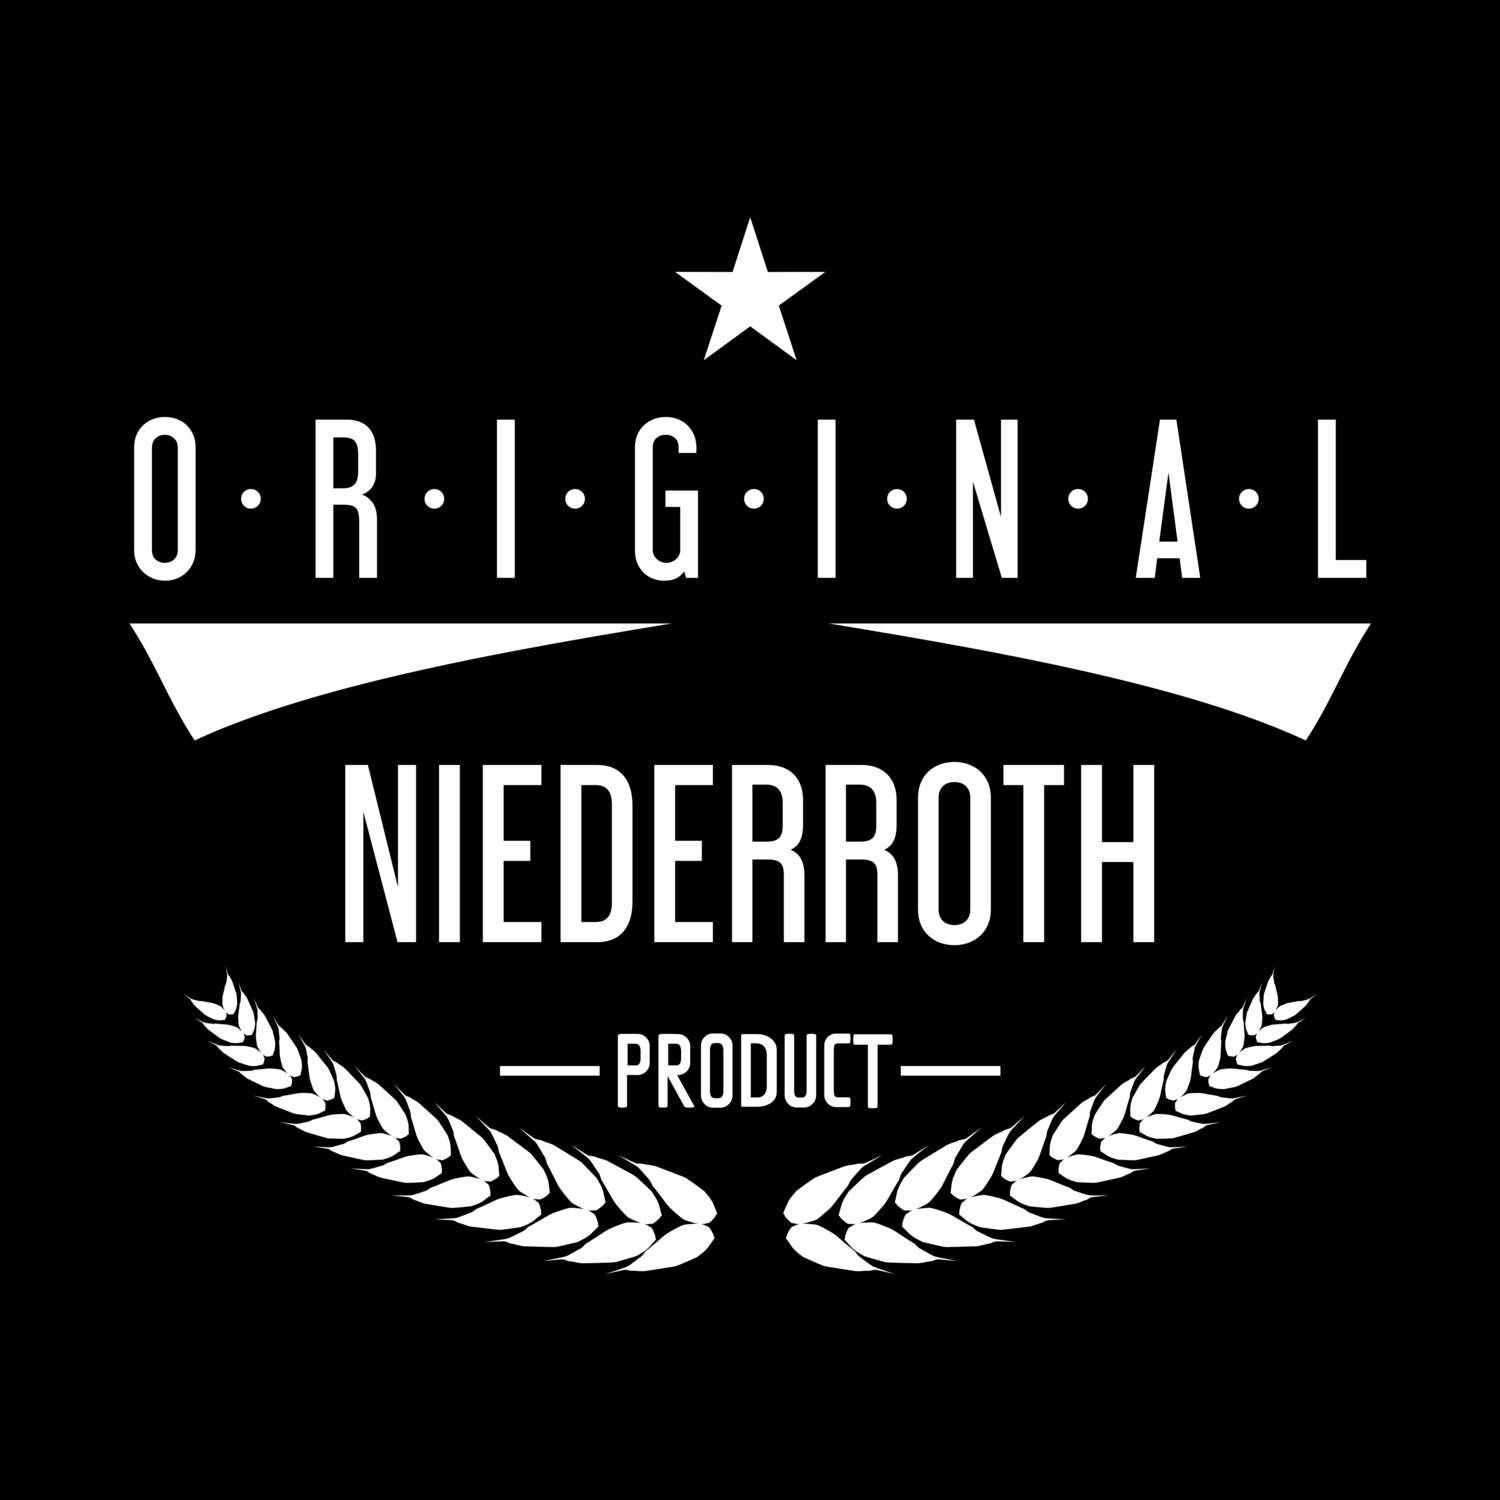 Niederroth T-Shirt »Original Product«